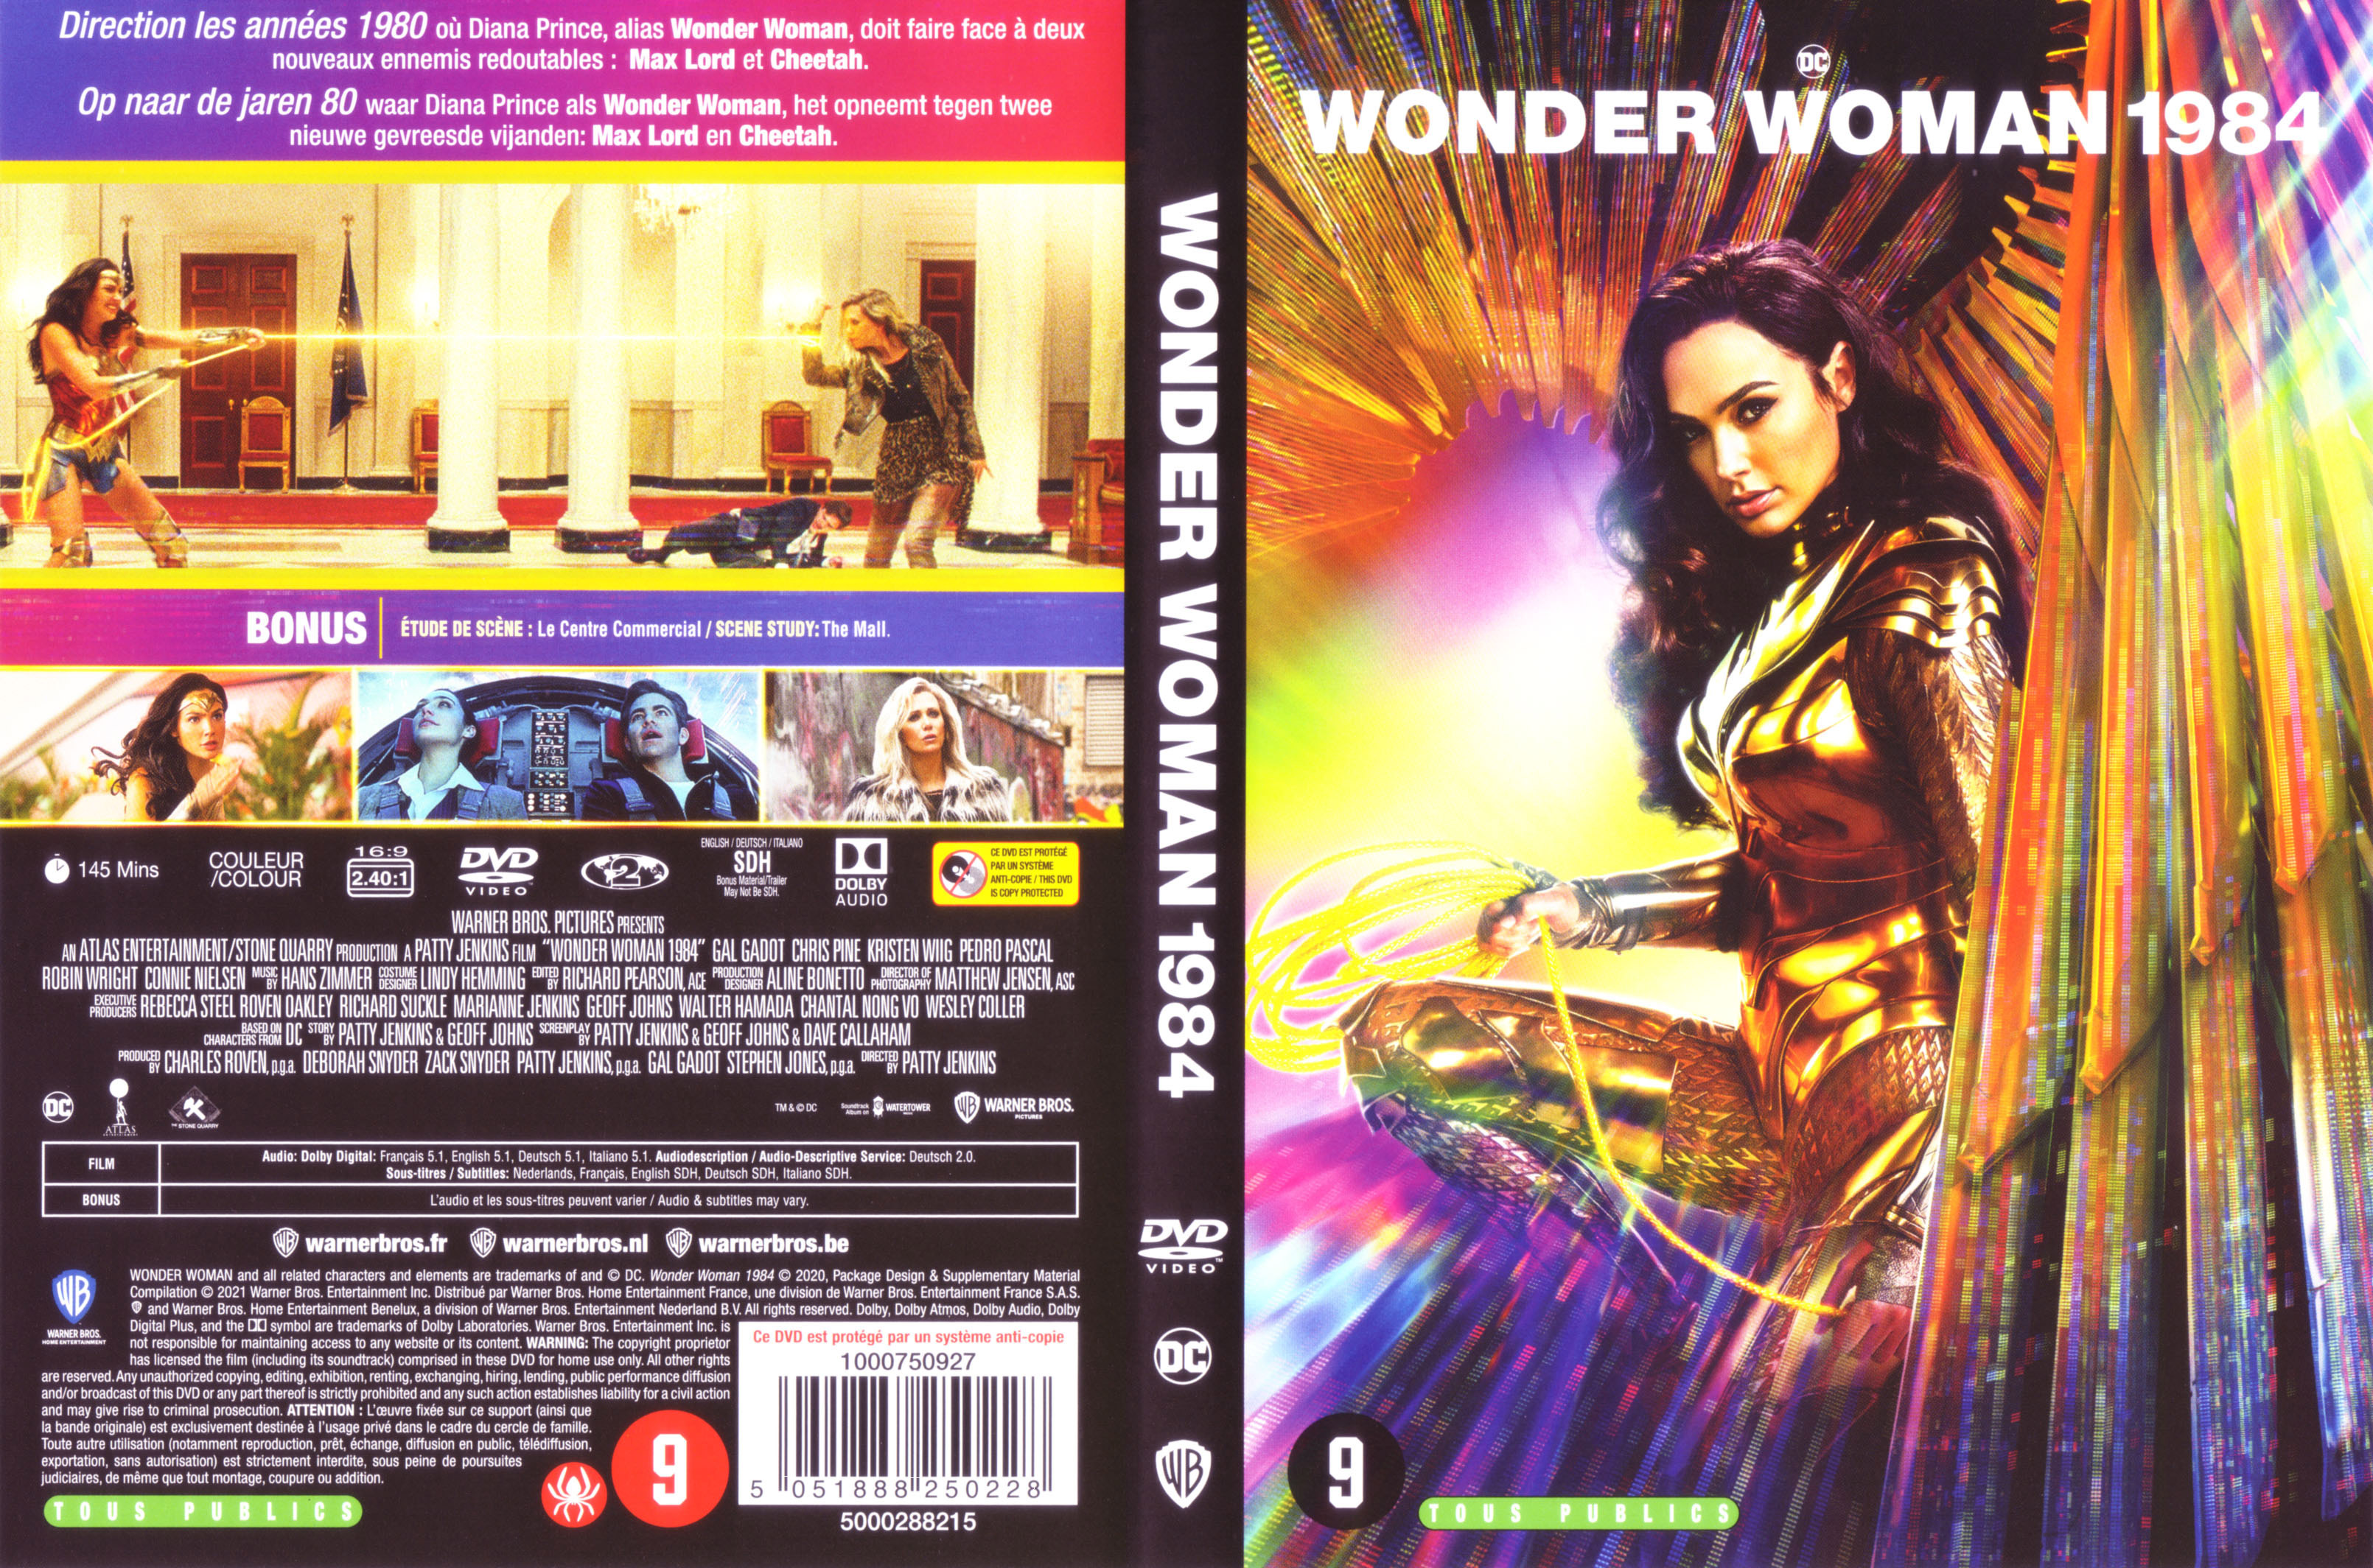 Jaquette DVD Wonder woman 1984